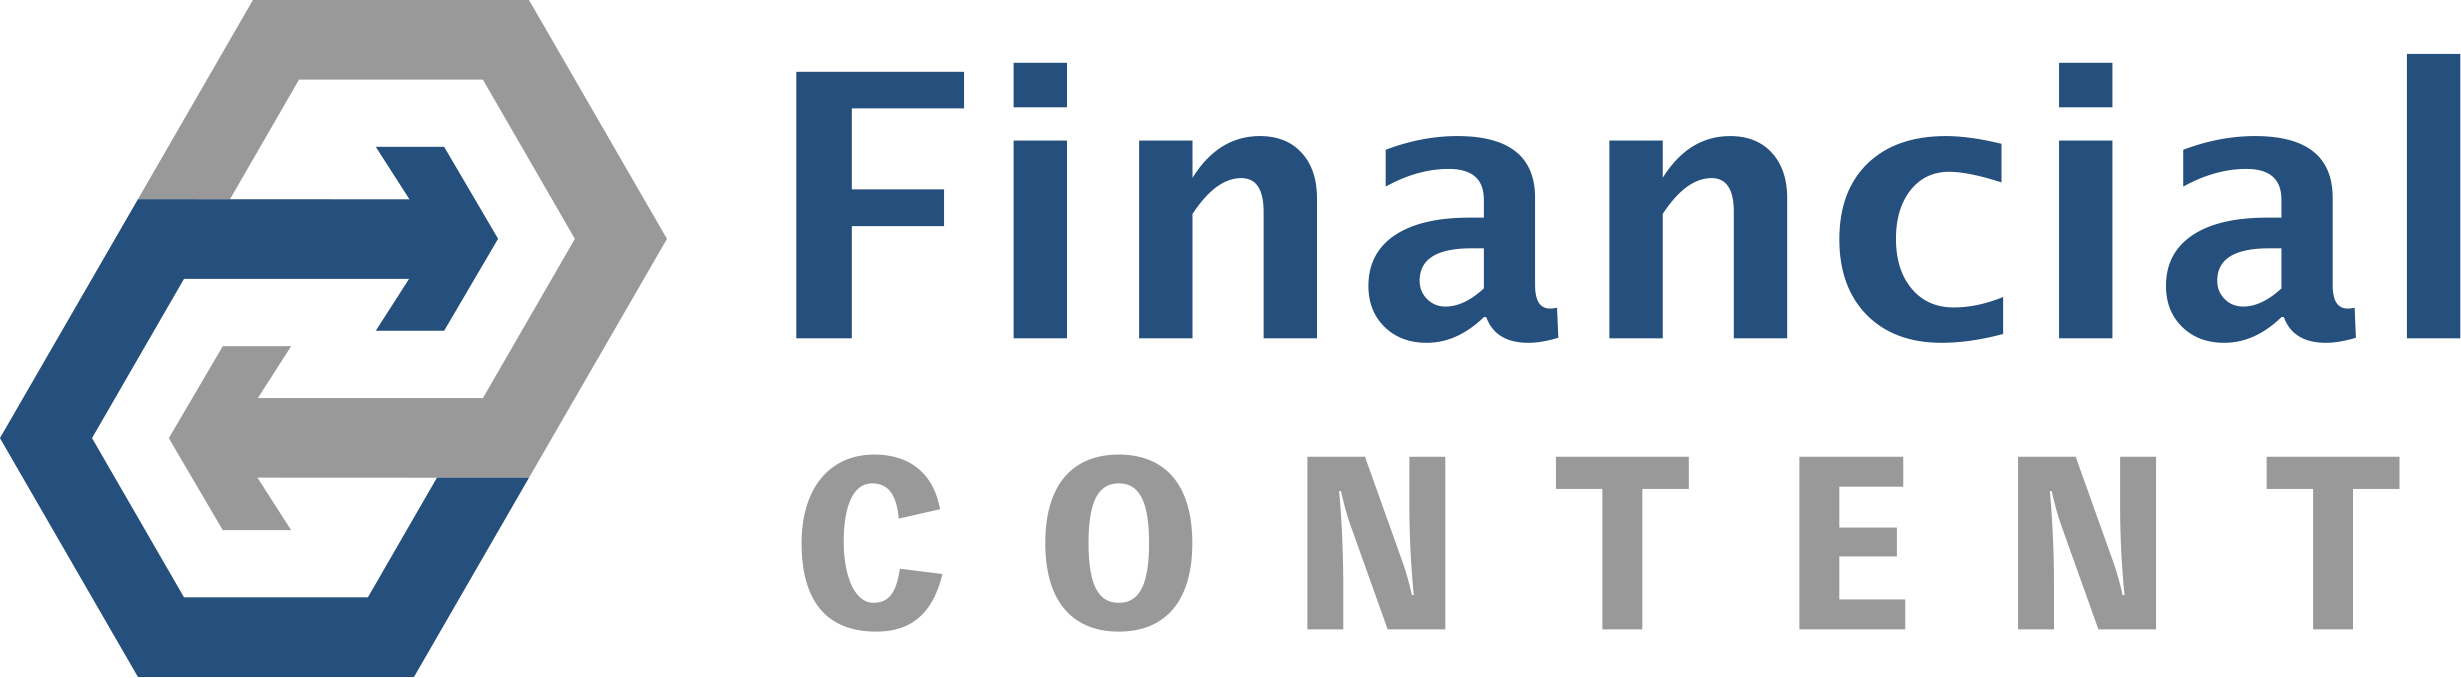 FinancialContent logo